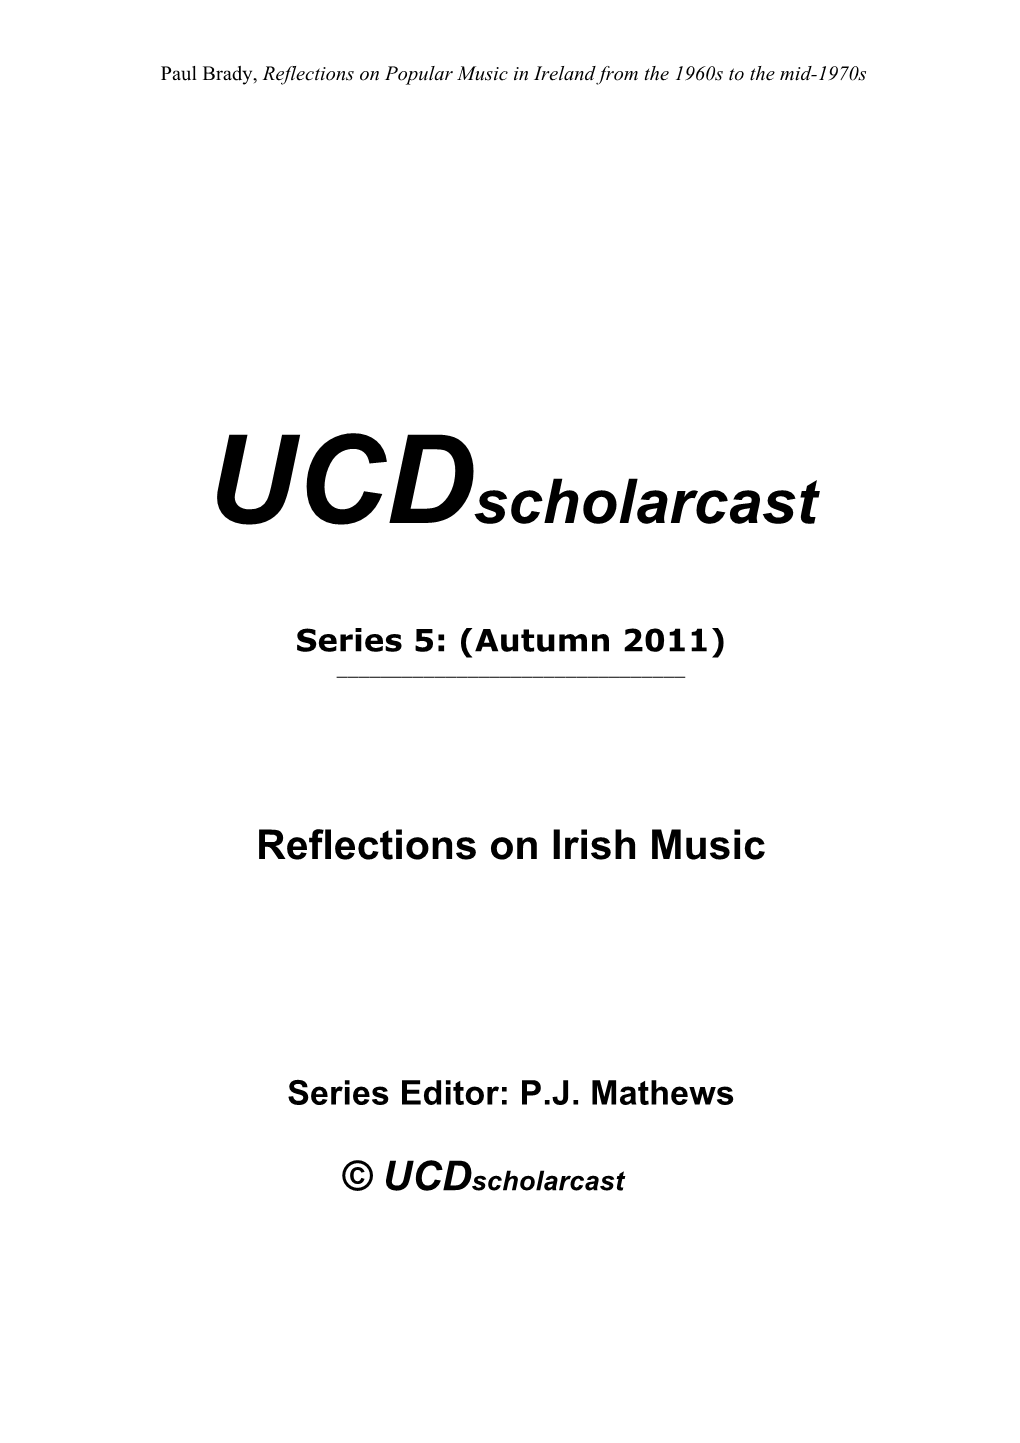 Reflections on Irish Music